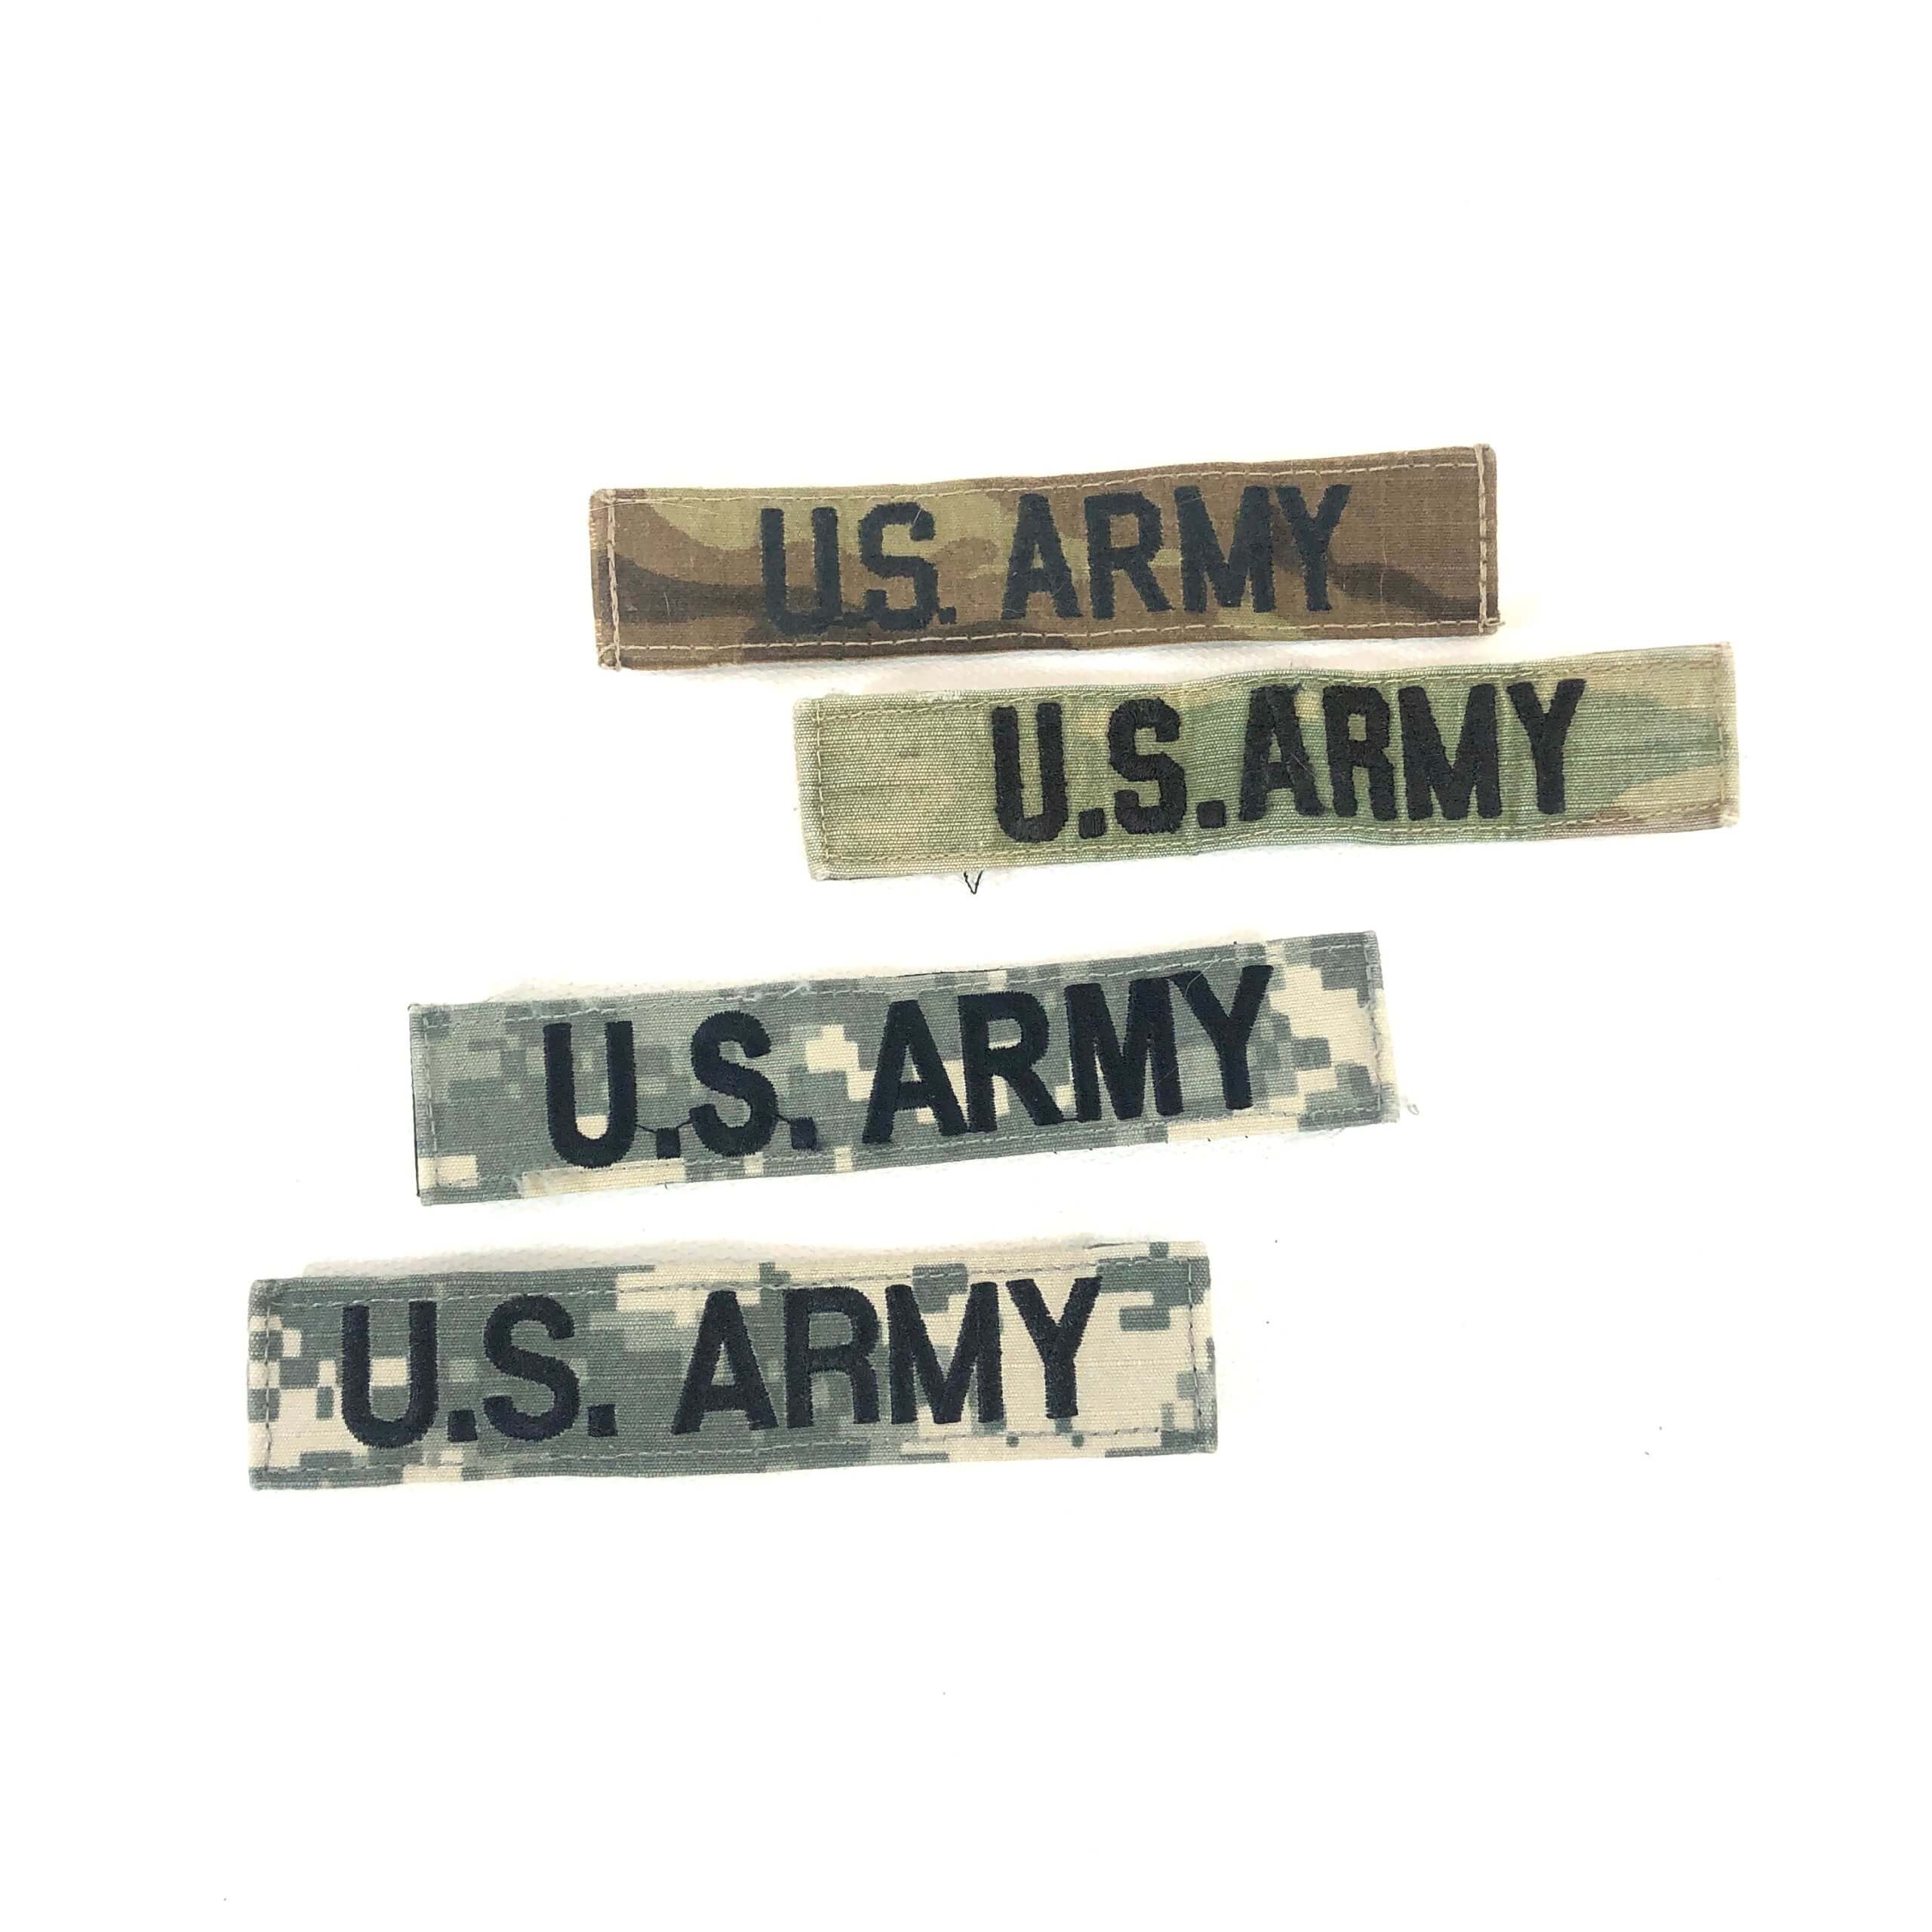 Name Tape - U.S. Army